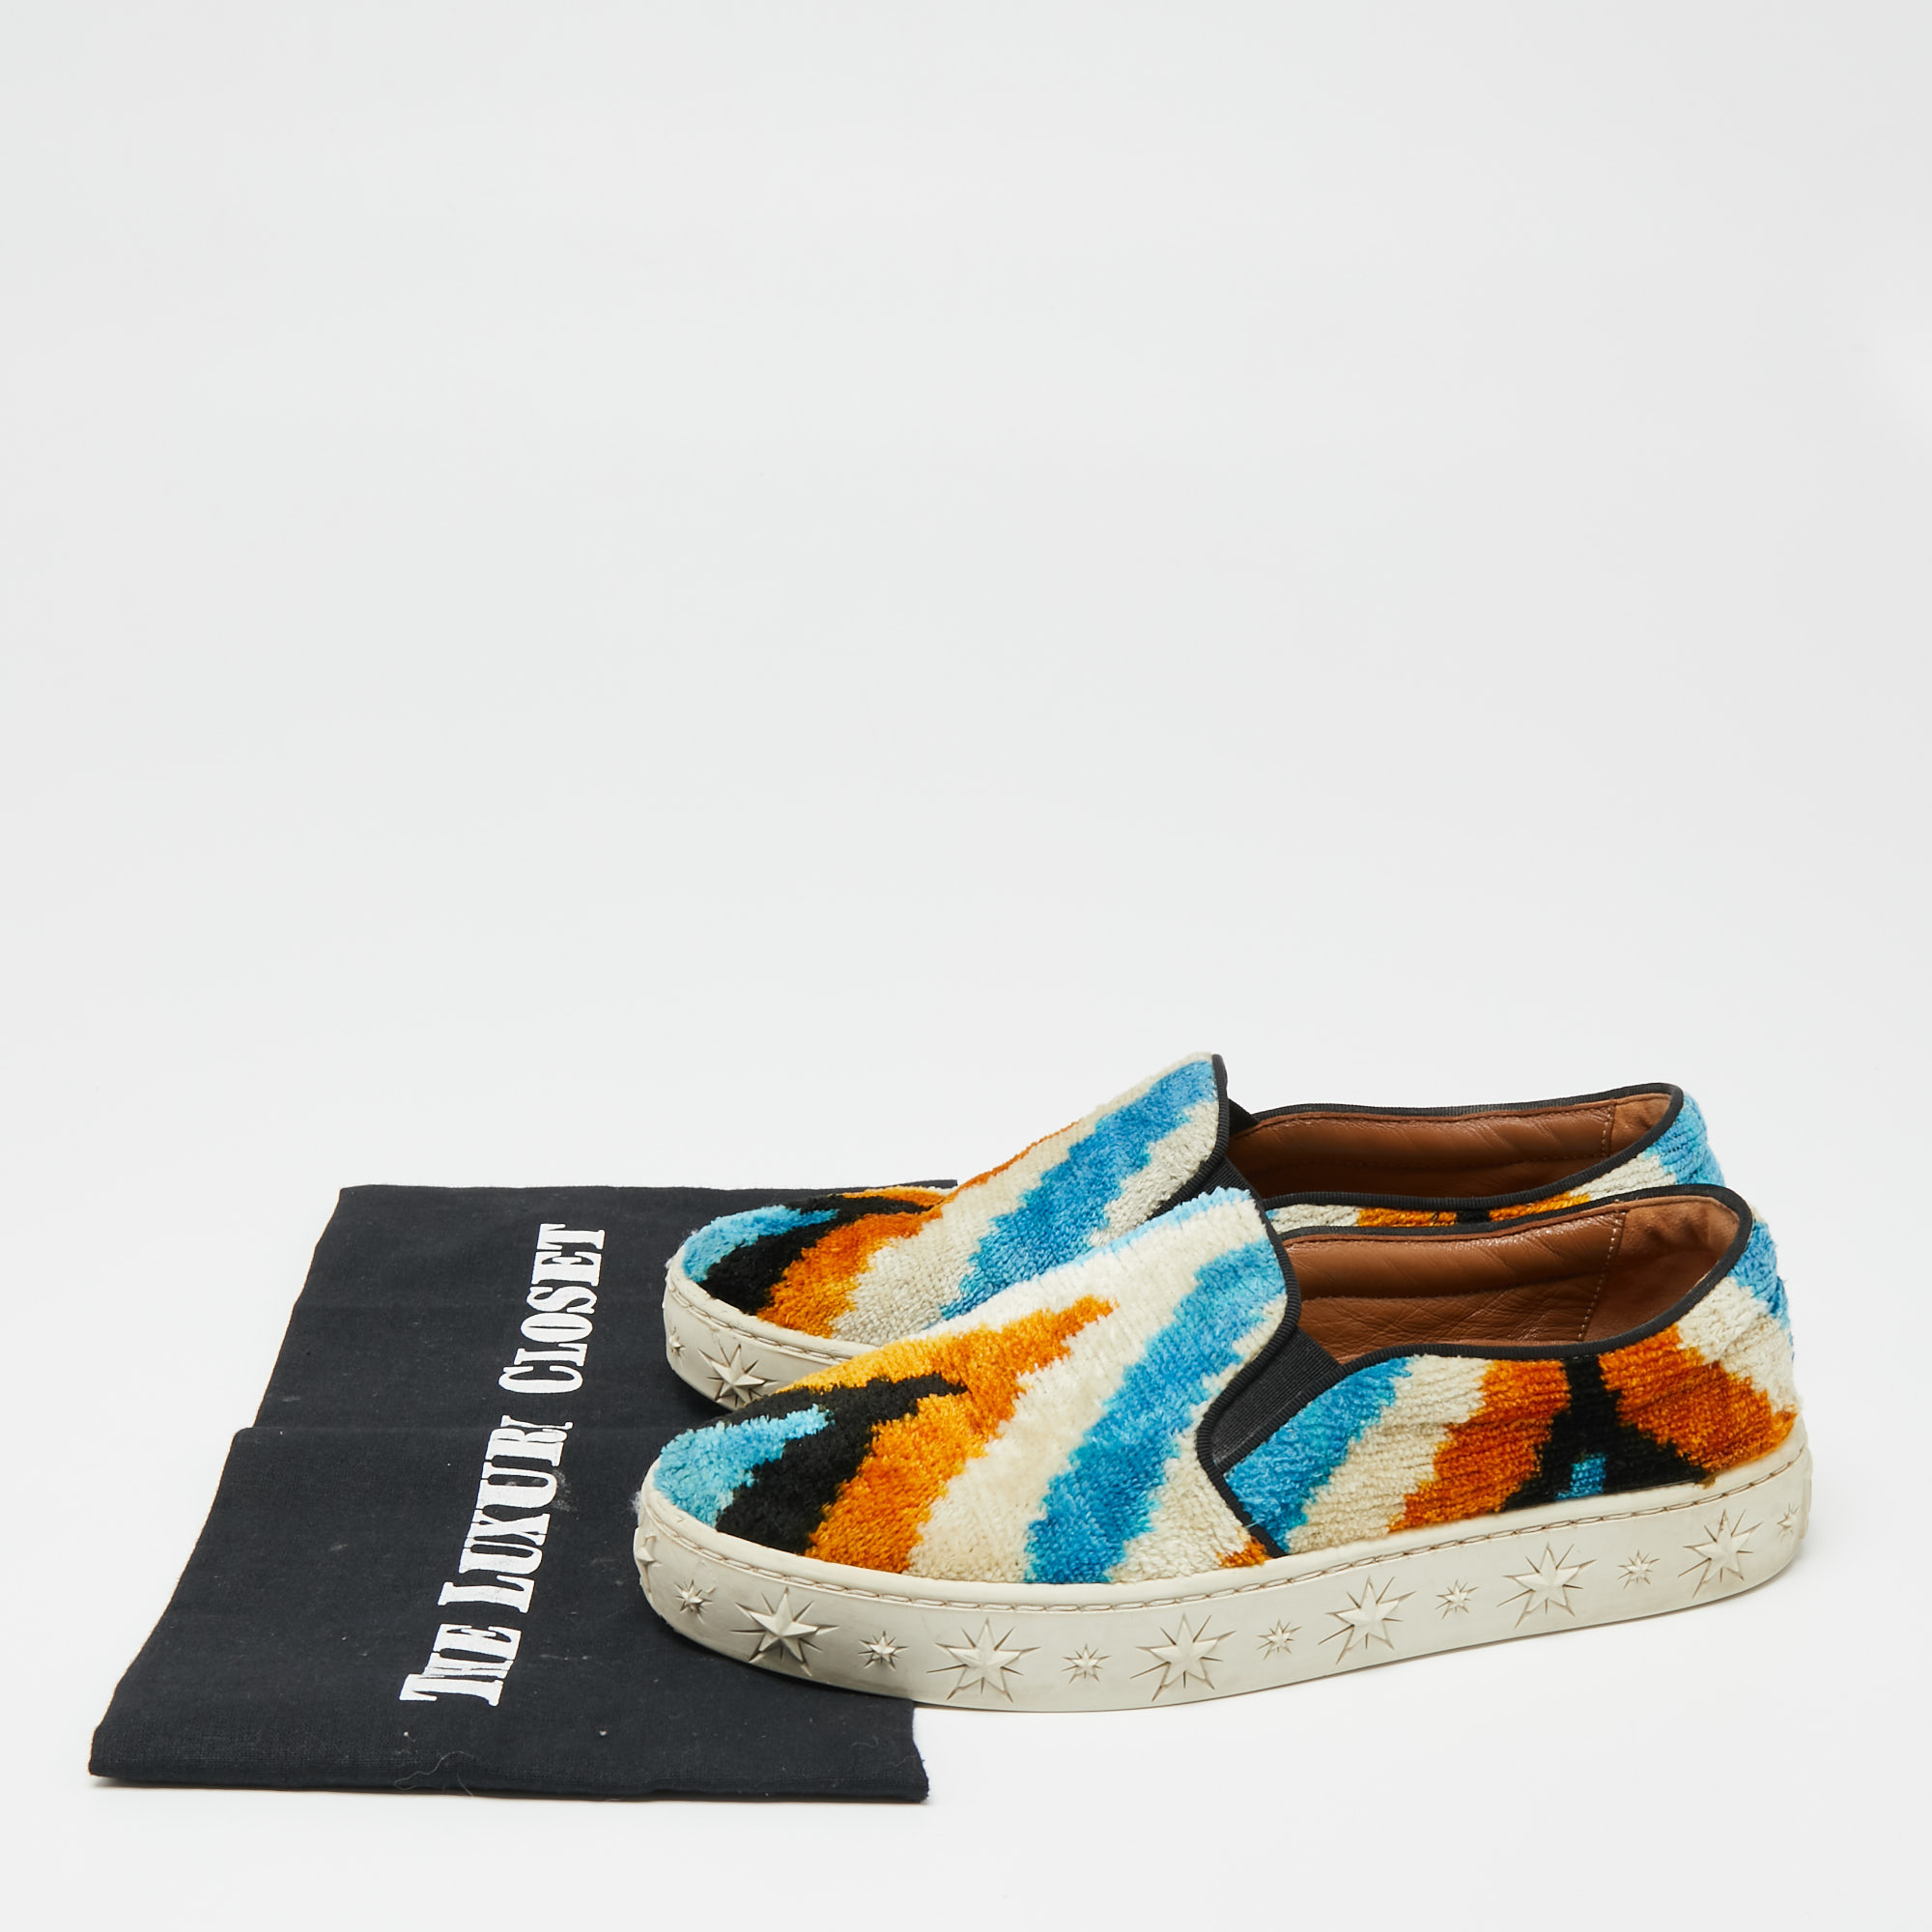 Aquazzura Multicolor Velvet Slip On Sneakers Size 35.5